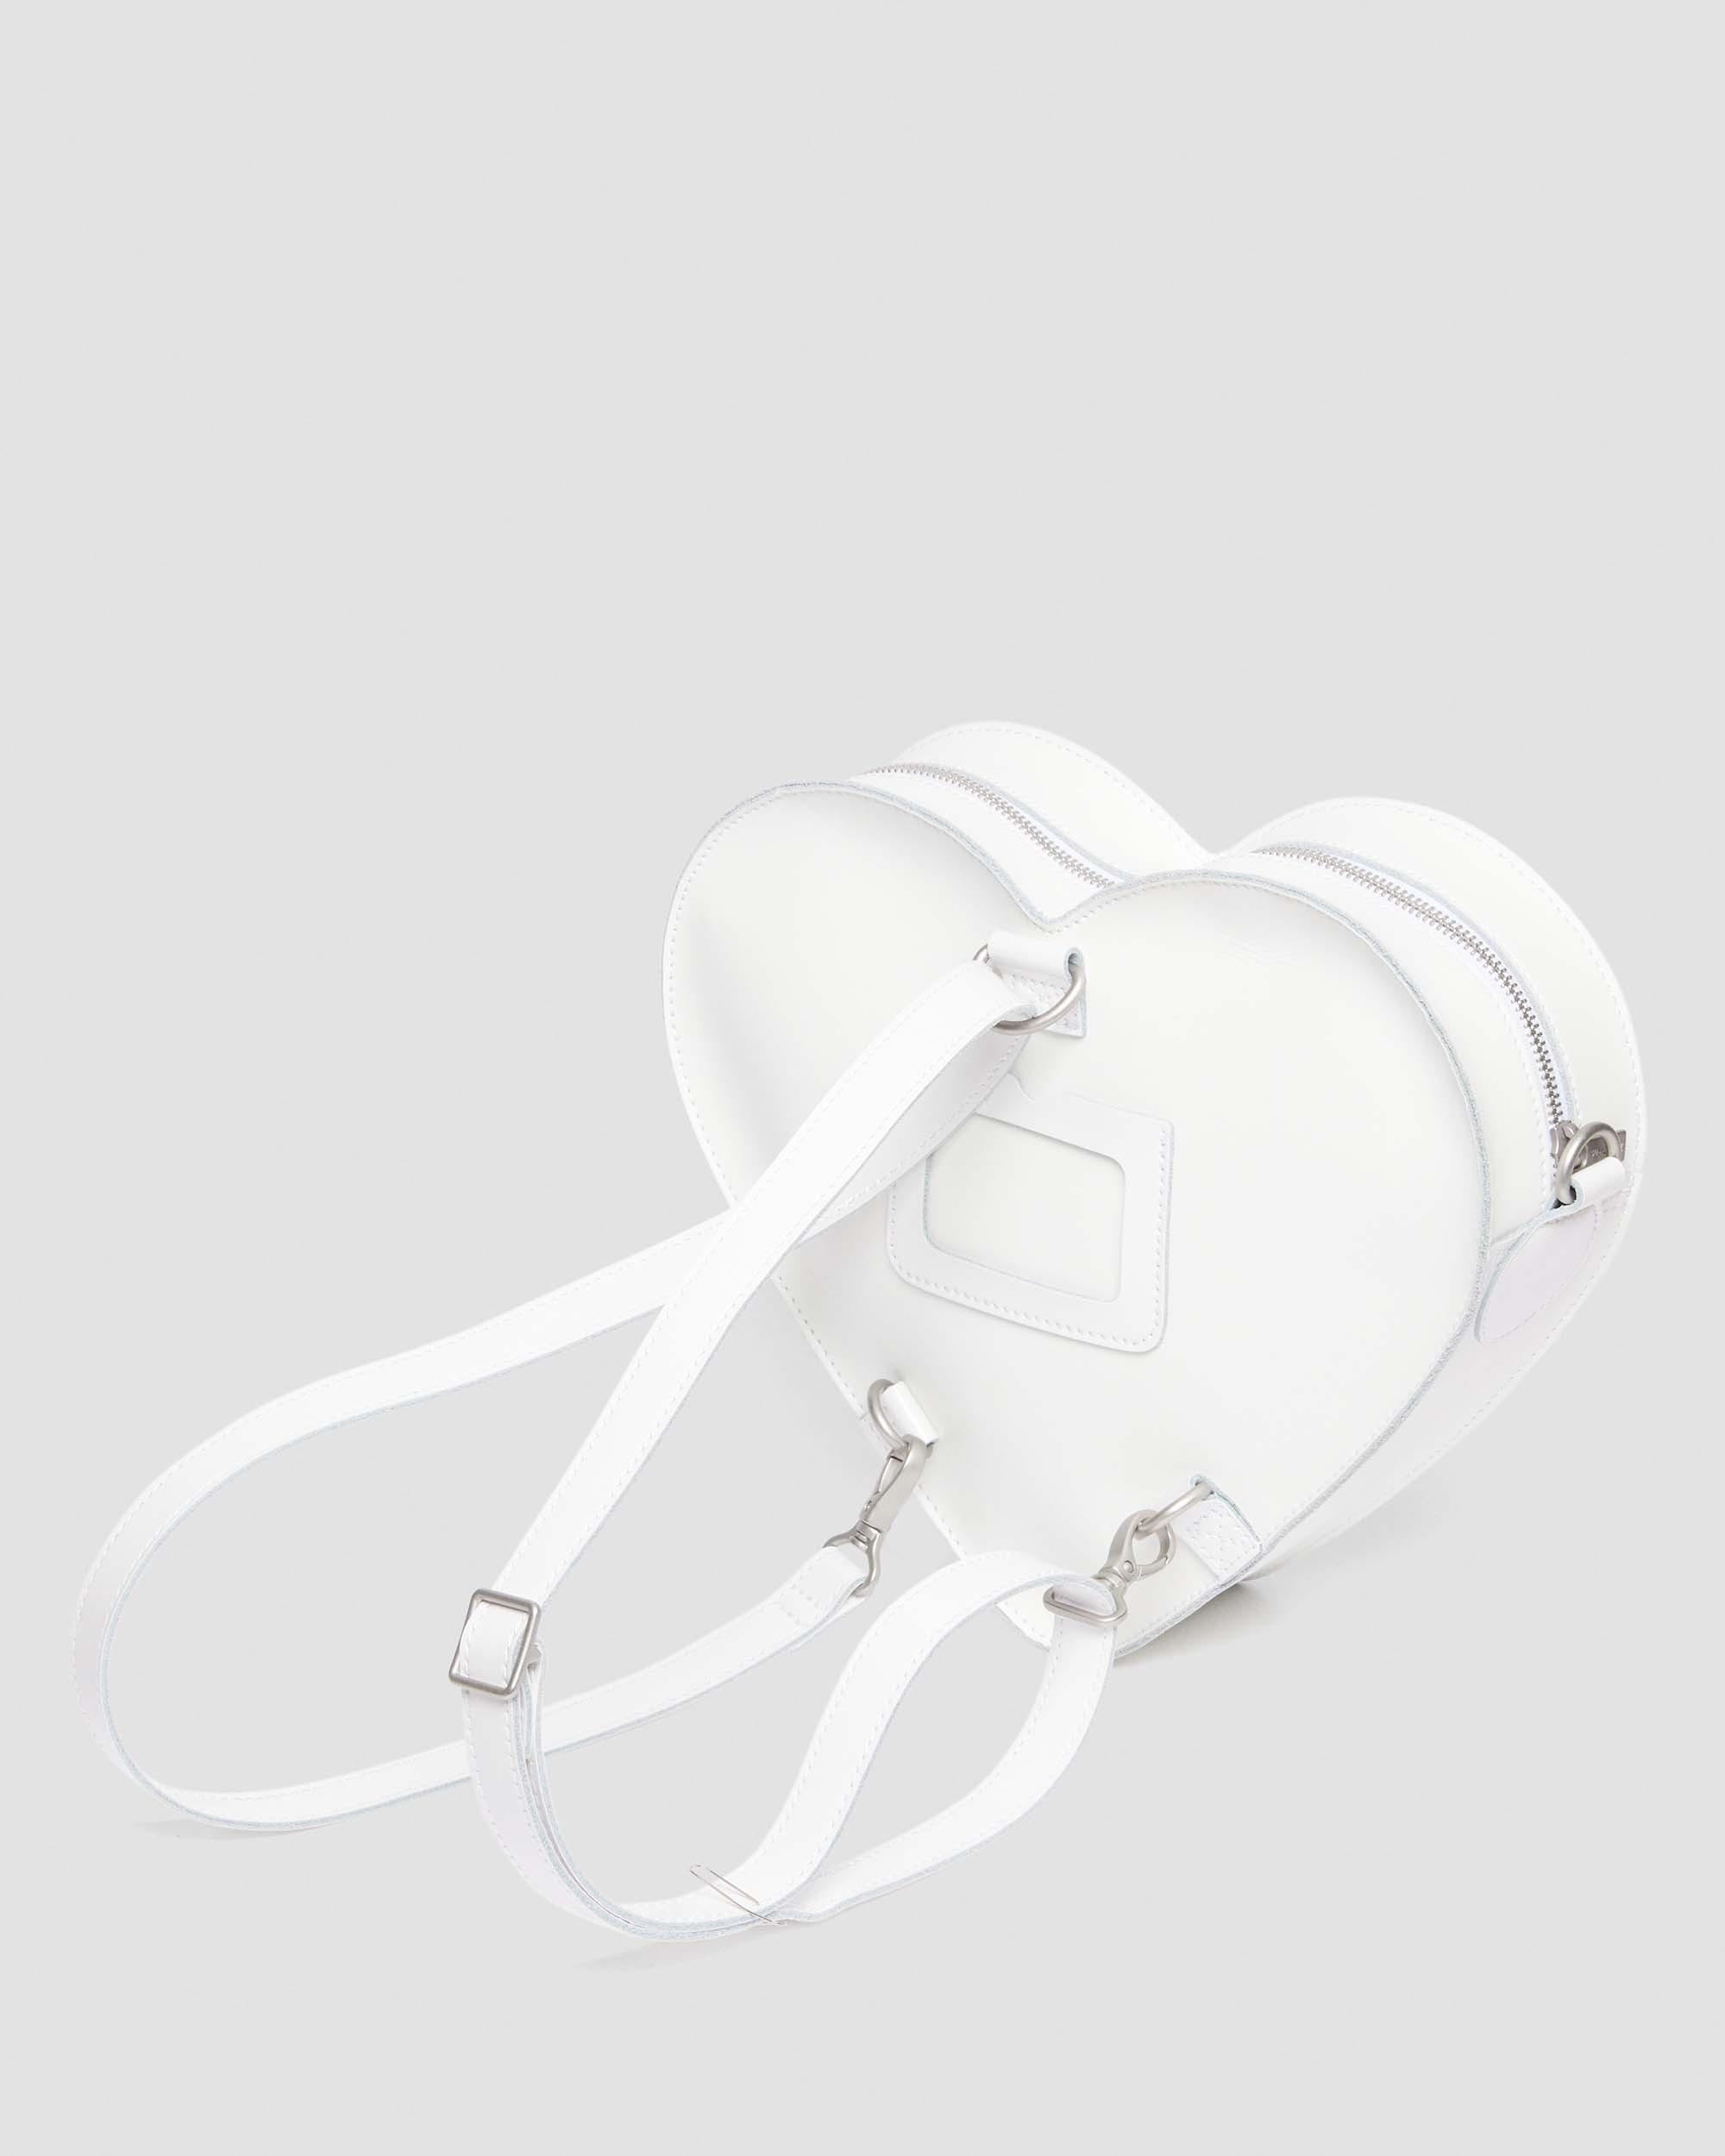 doc martens heart shaped satchel bag white from Japan Popular